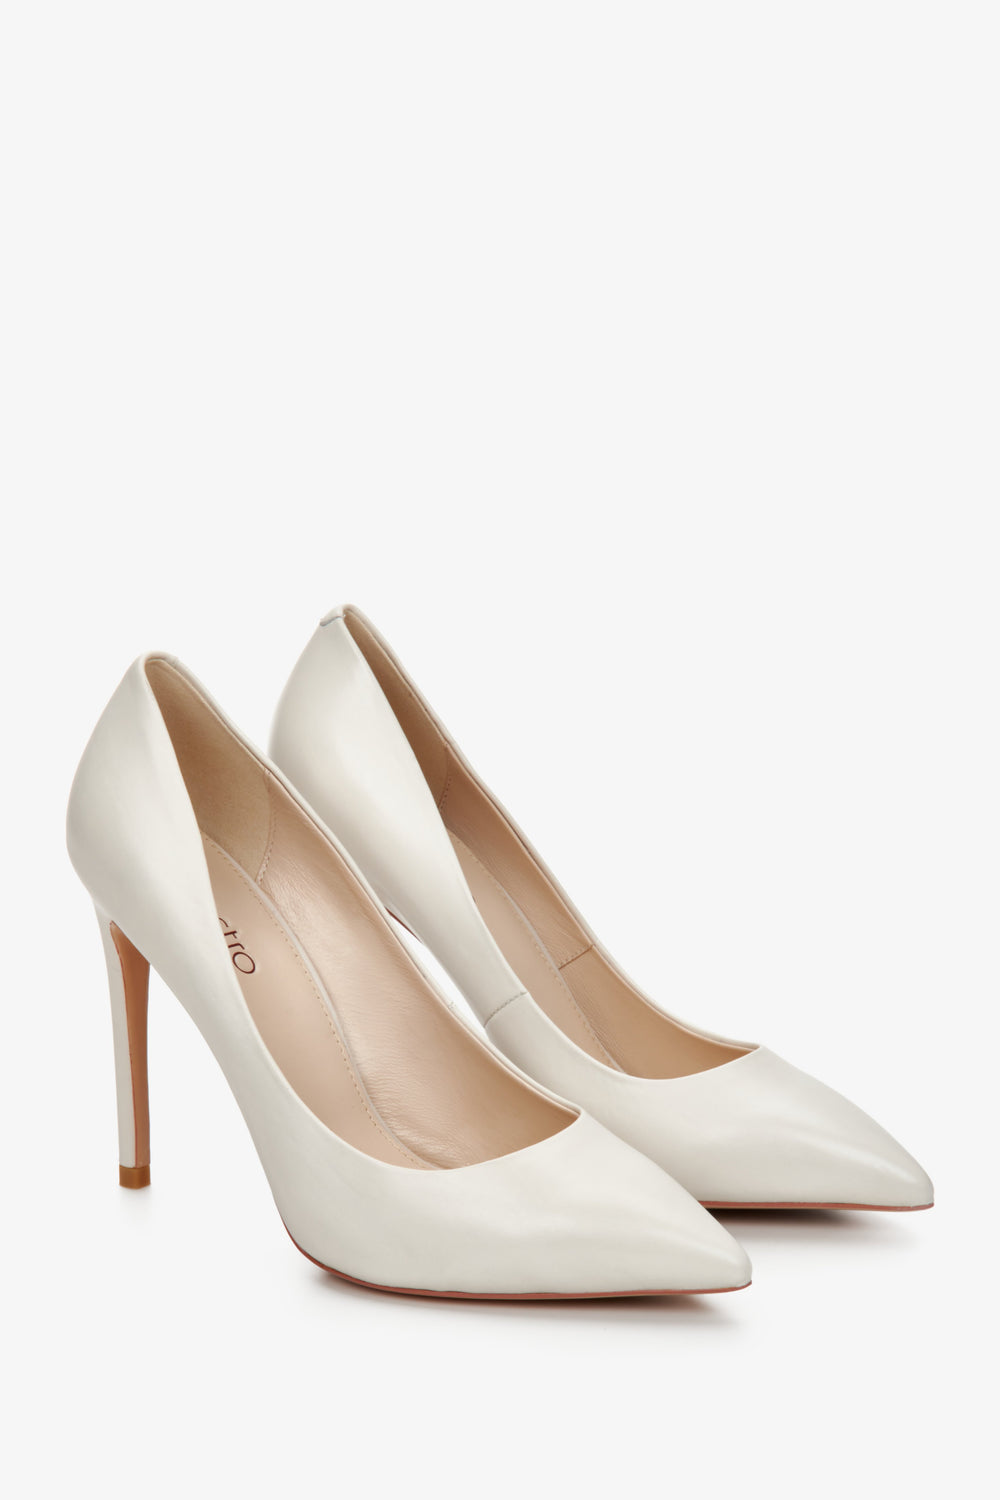 Women's white high-heeled stilettos made of genuine leather by Estro.